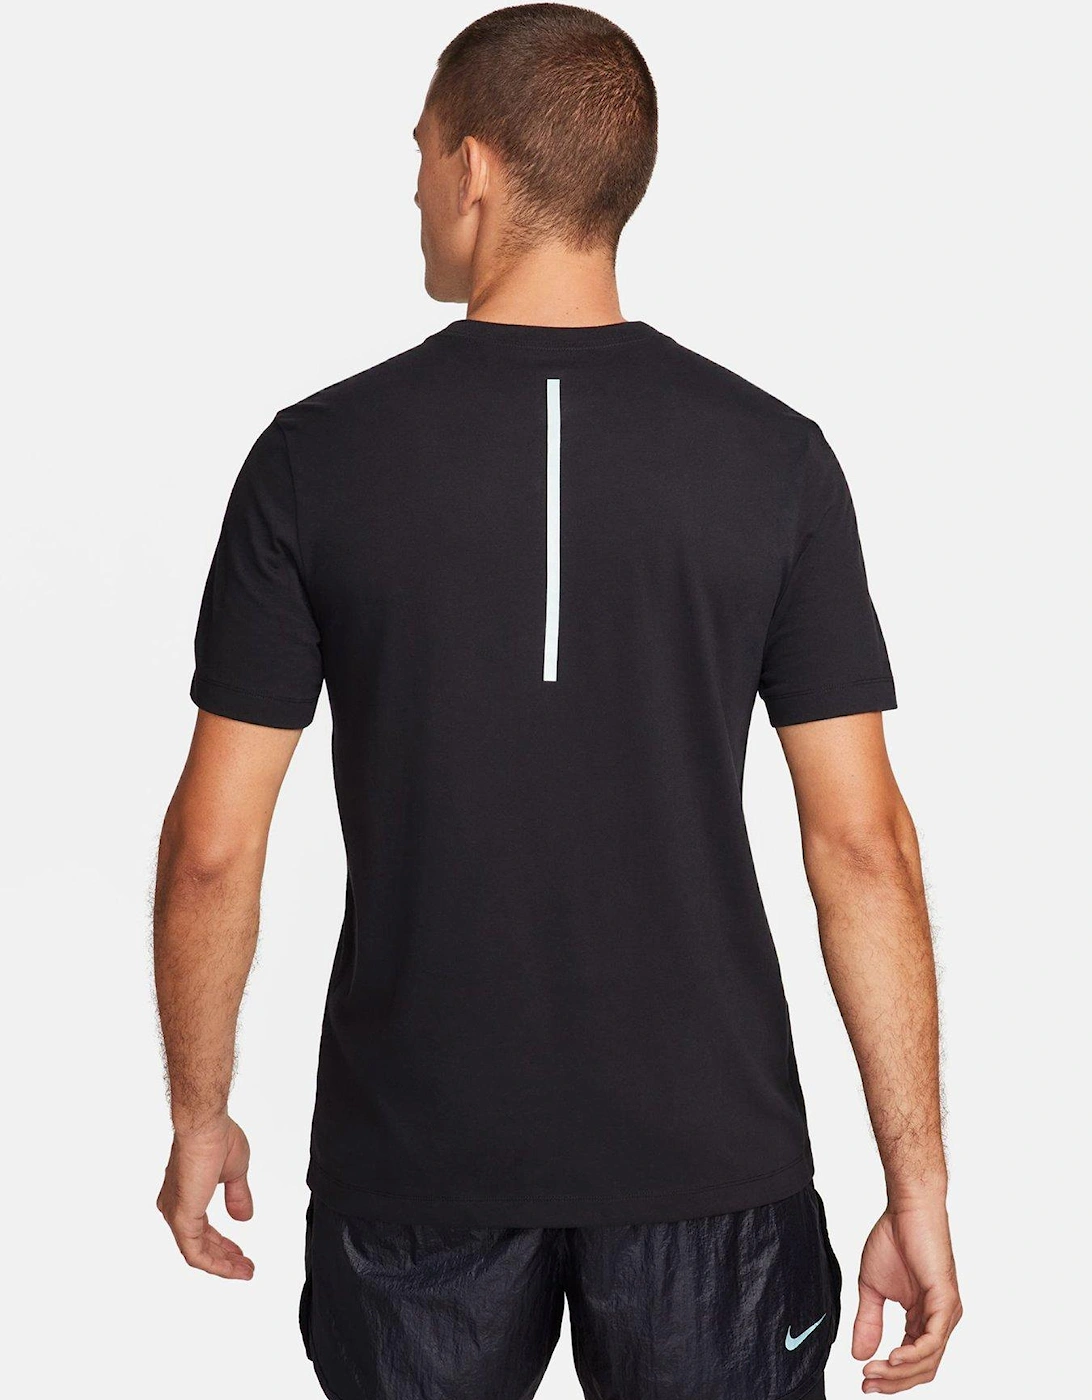 Men's Run Division T-Shirt - Black